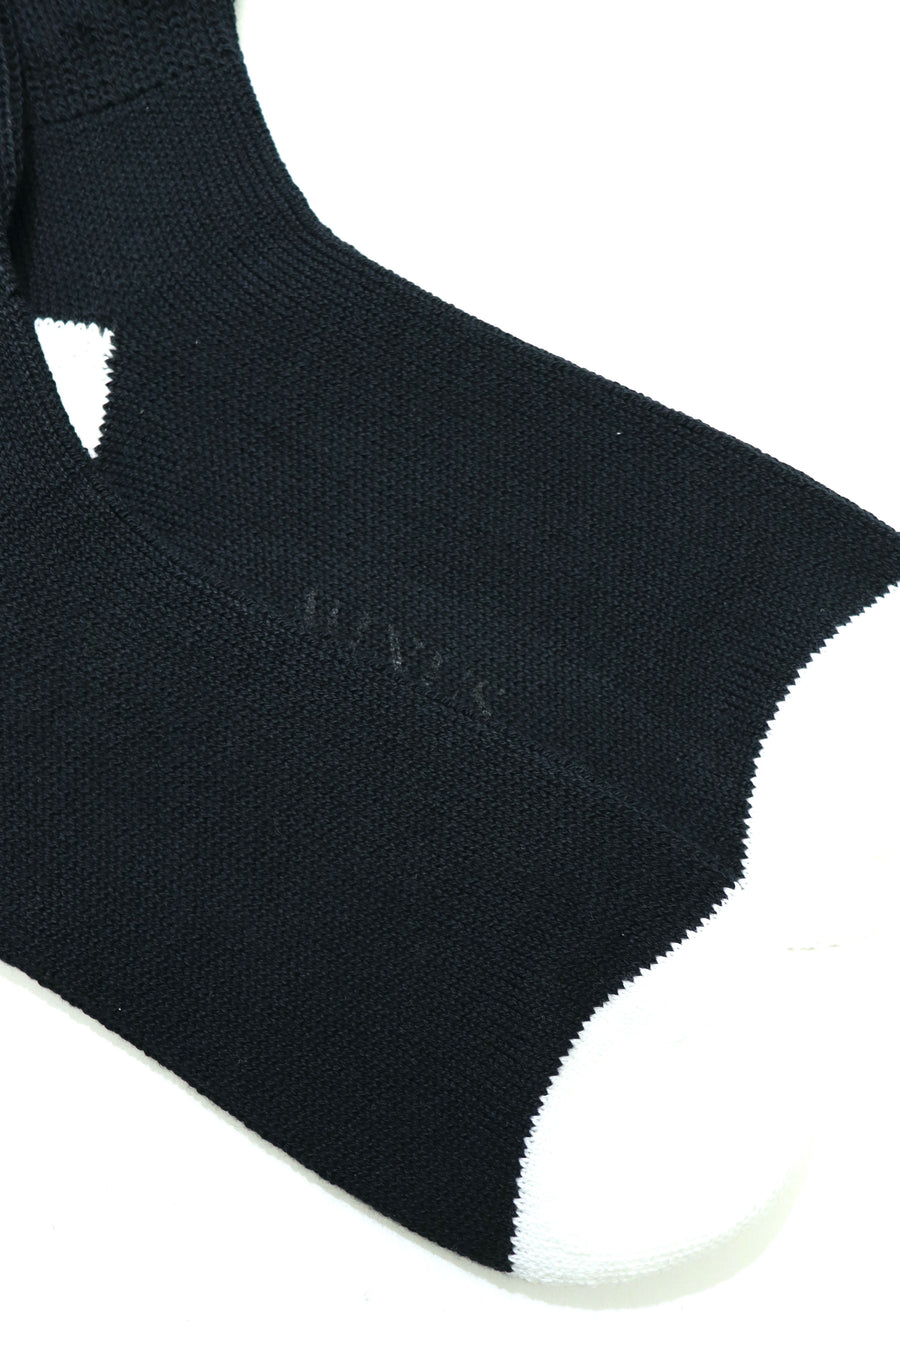 MINUS × WHIMSY  Logo Socks LOOSE FIT(BLACK)